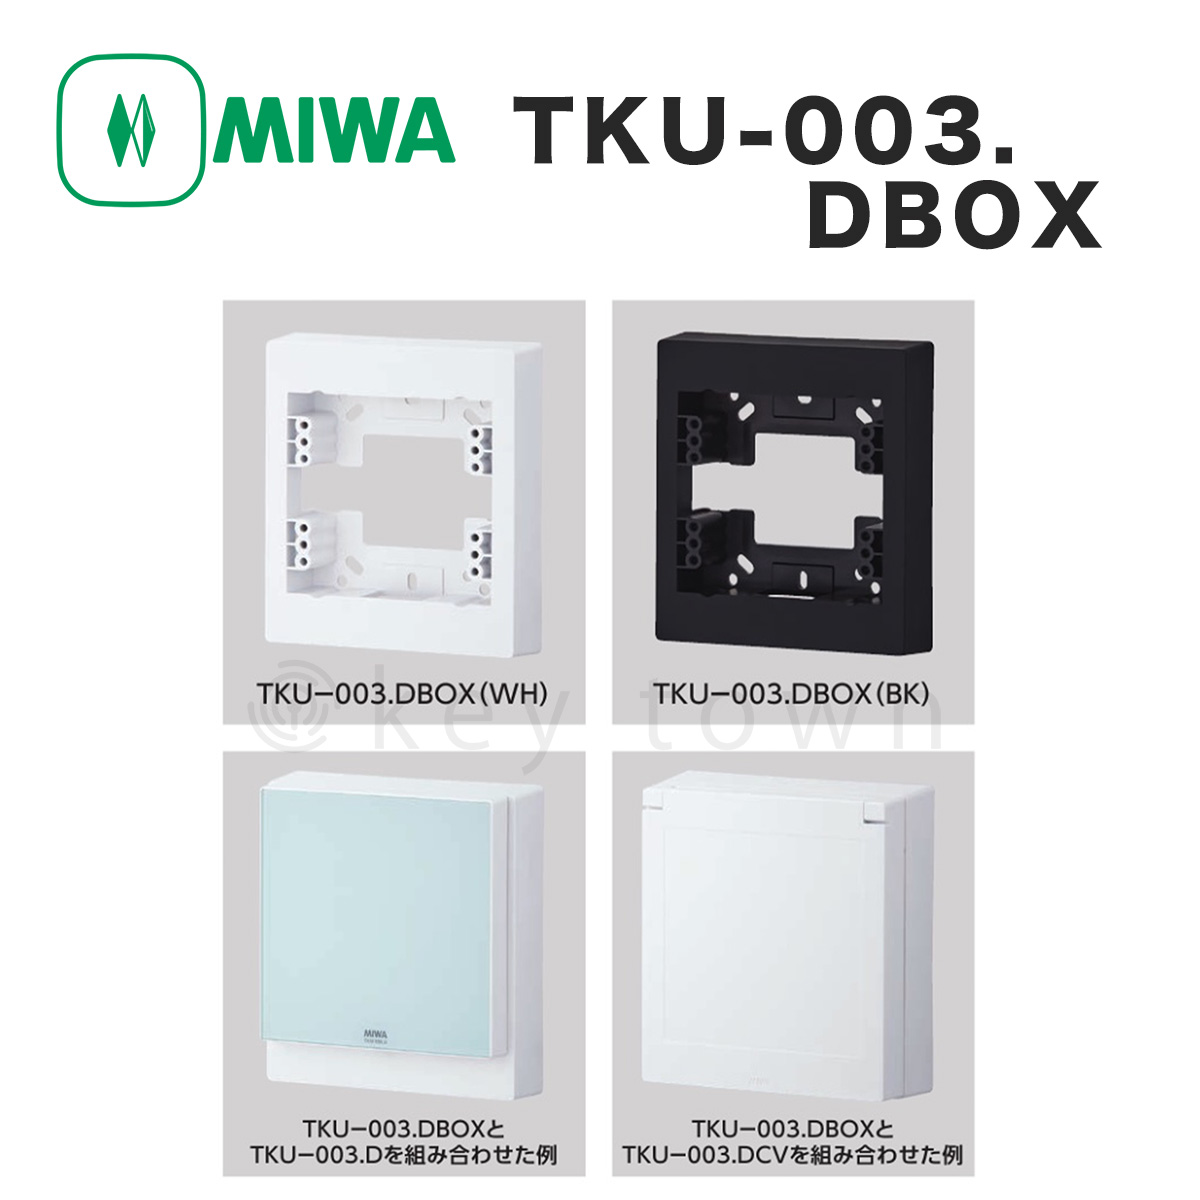 MIWA 【美和ロック】 TKU-003 DBOX 面付きボックス[MIWA BAN-003.DBOX 